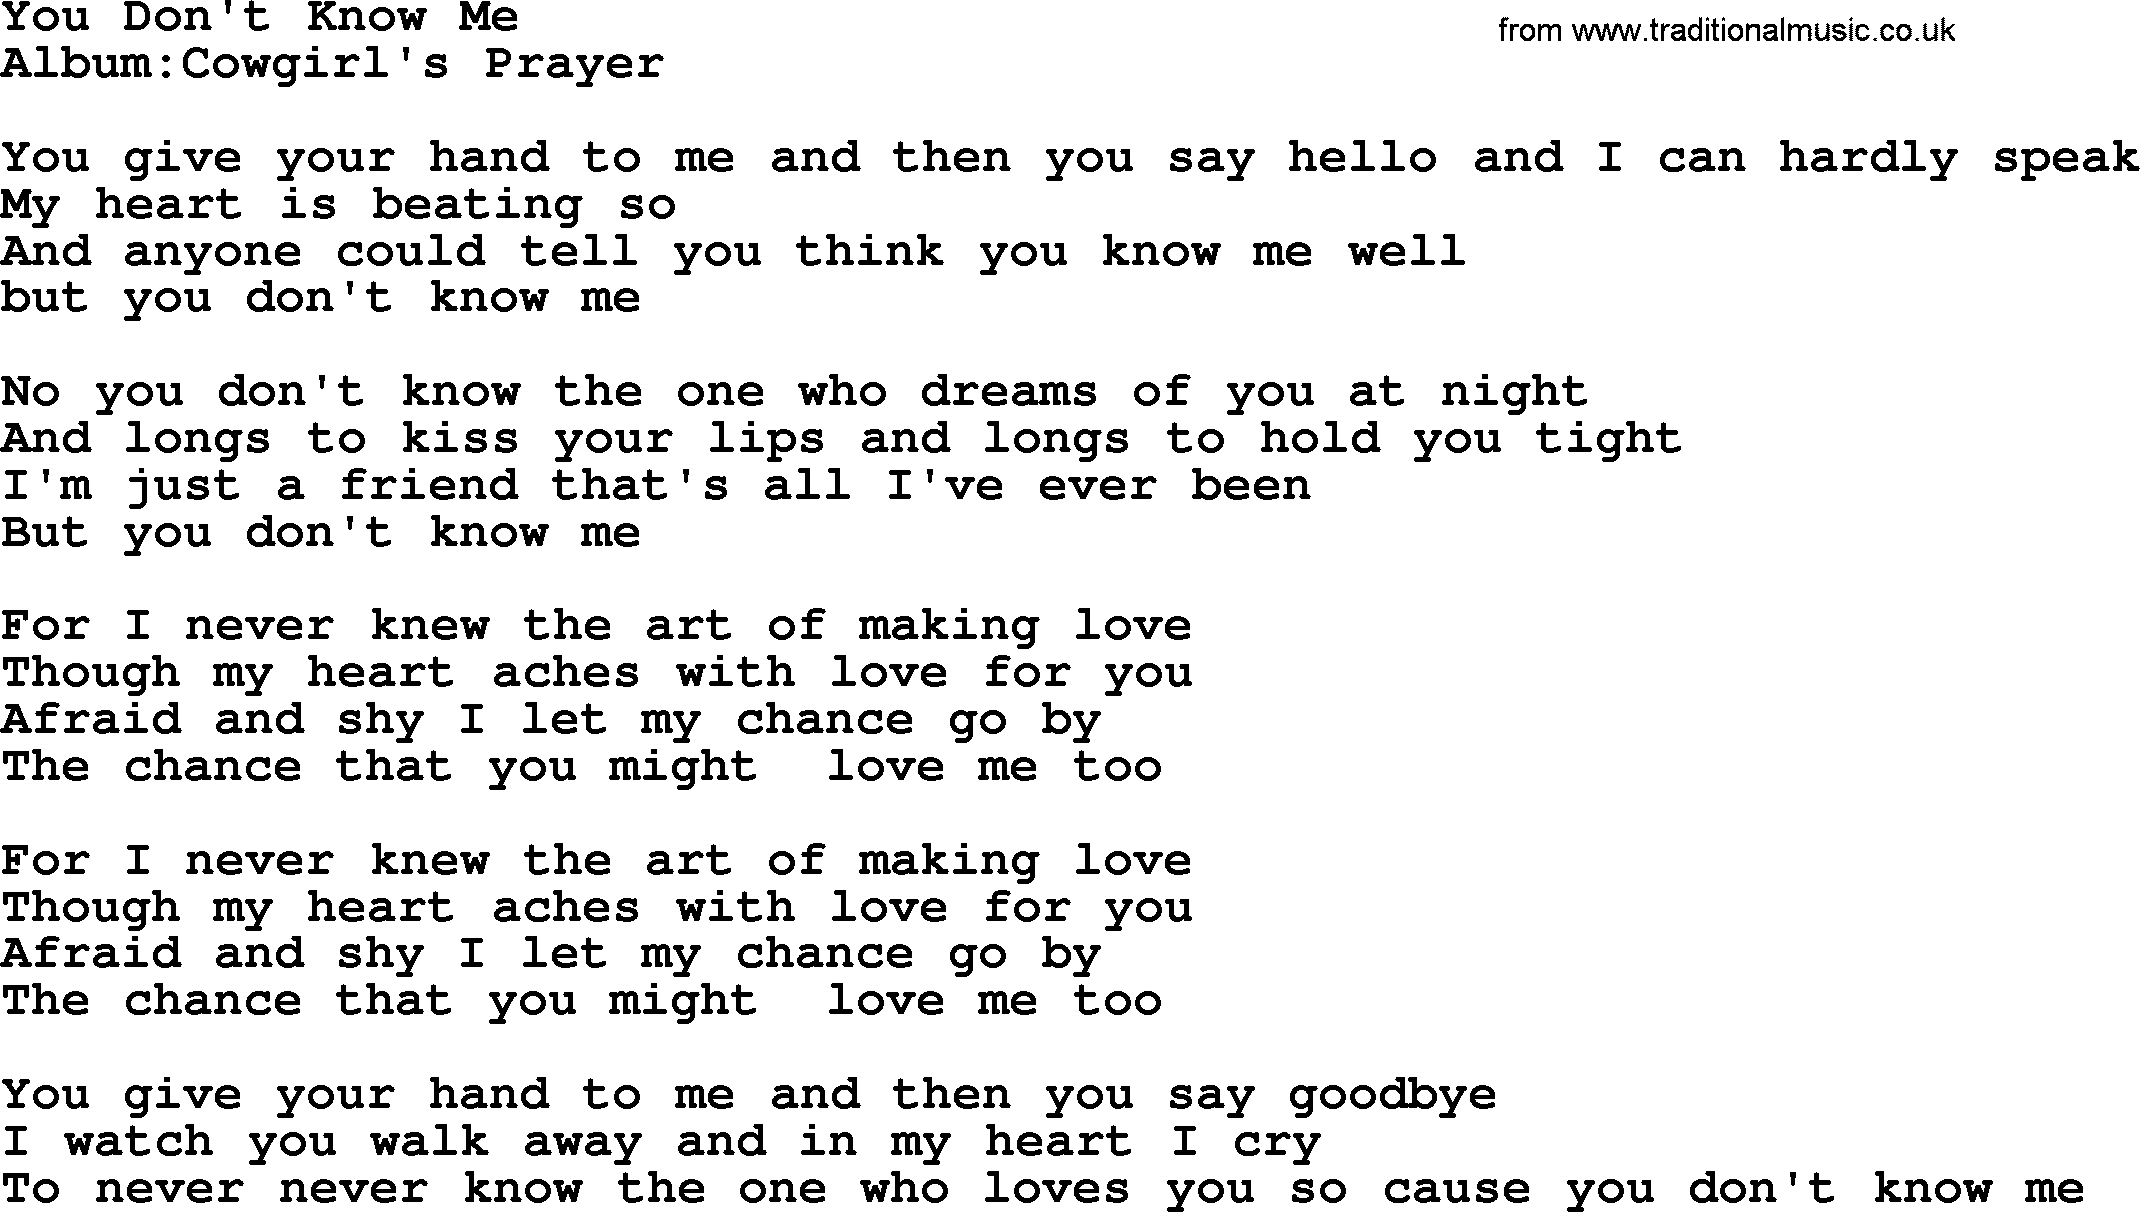 Emmylou Harris song: You Don't Know Me lyrics